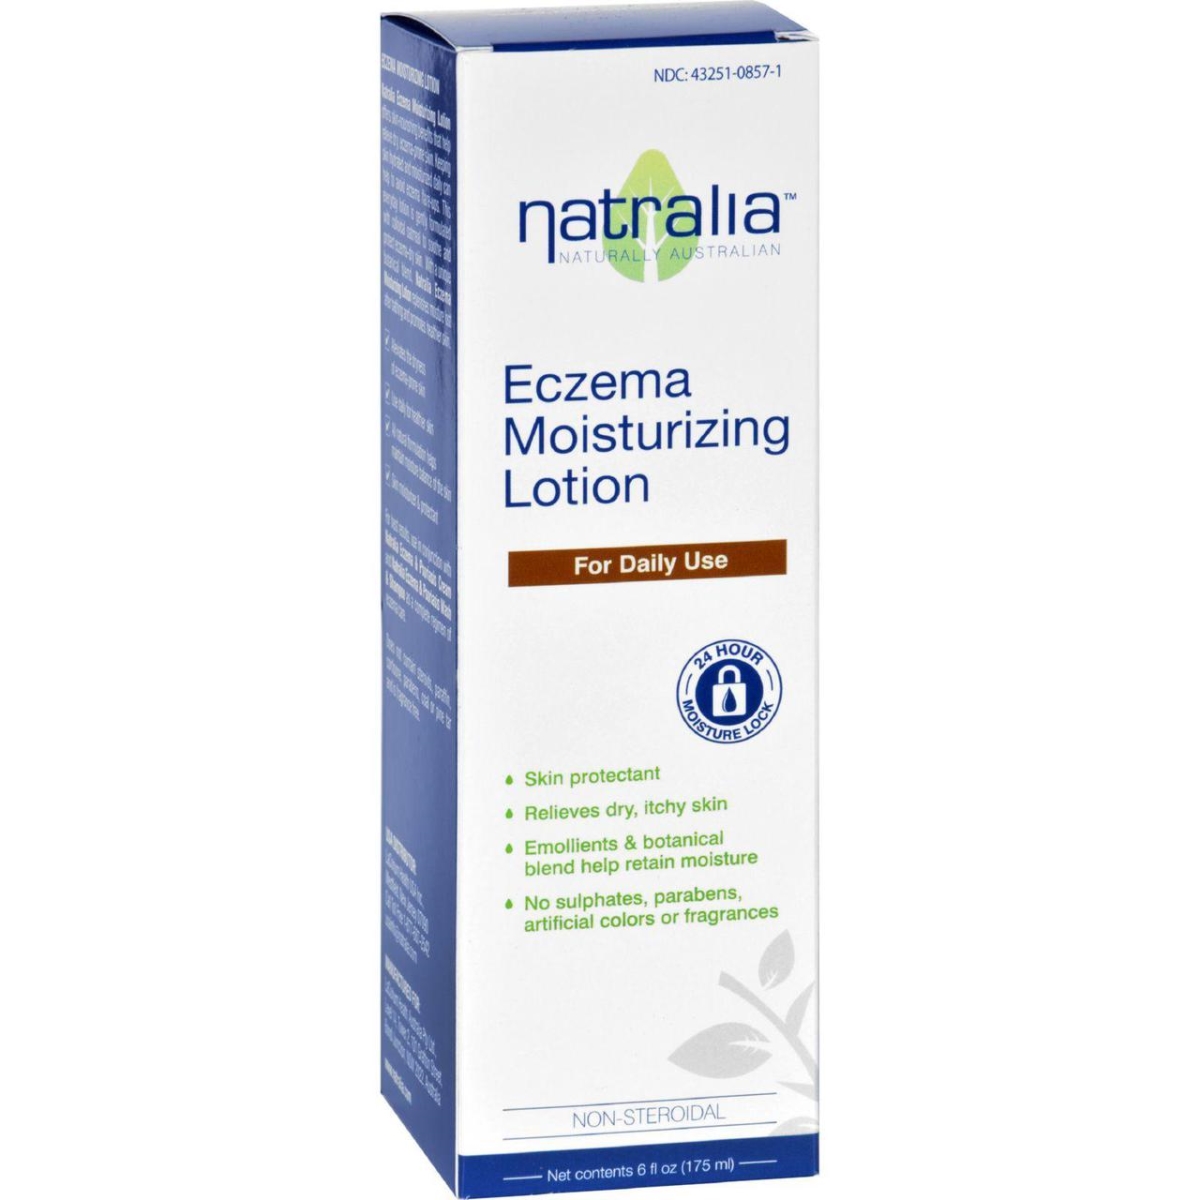 Hg1713395 6 Oz Eczema Lotion - Moisturizing